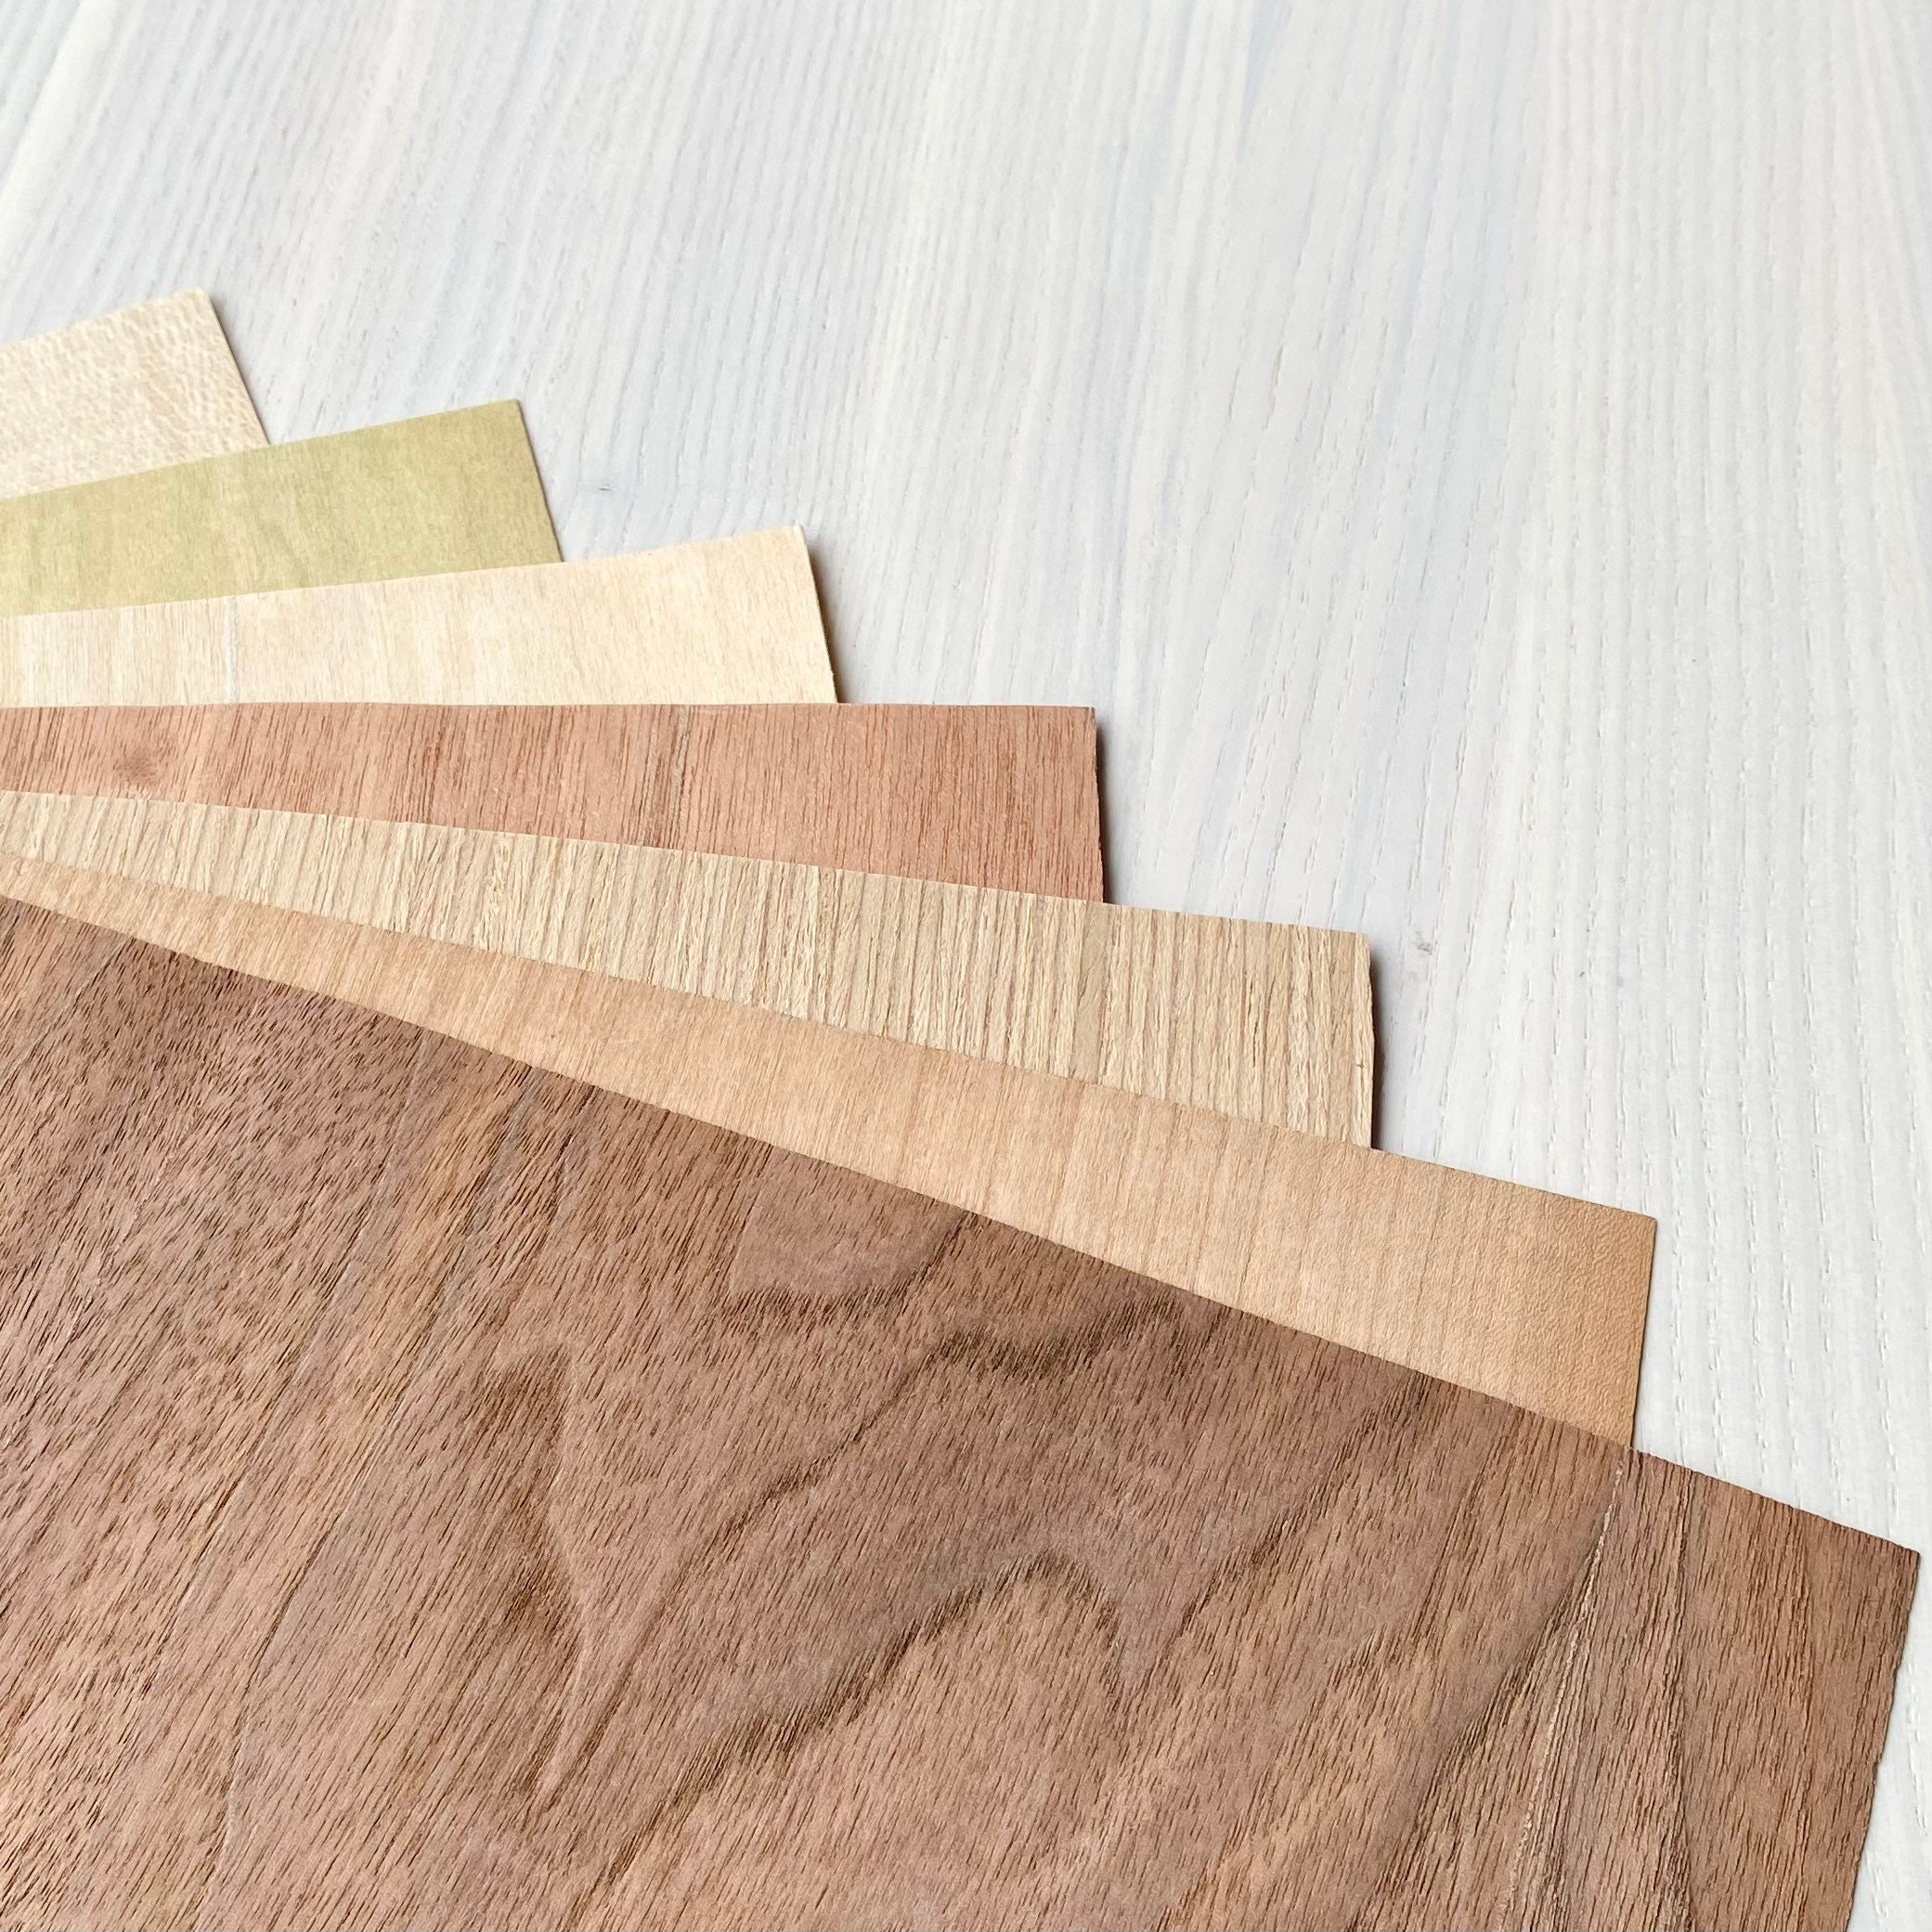 Solid Maple Wood Sheet Plank Thin 1/32 X 3 X 12 Long Veneer